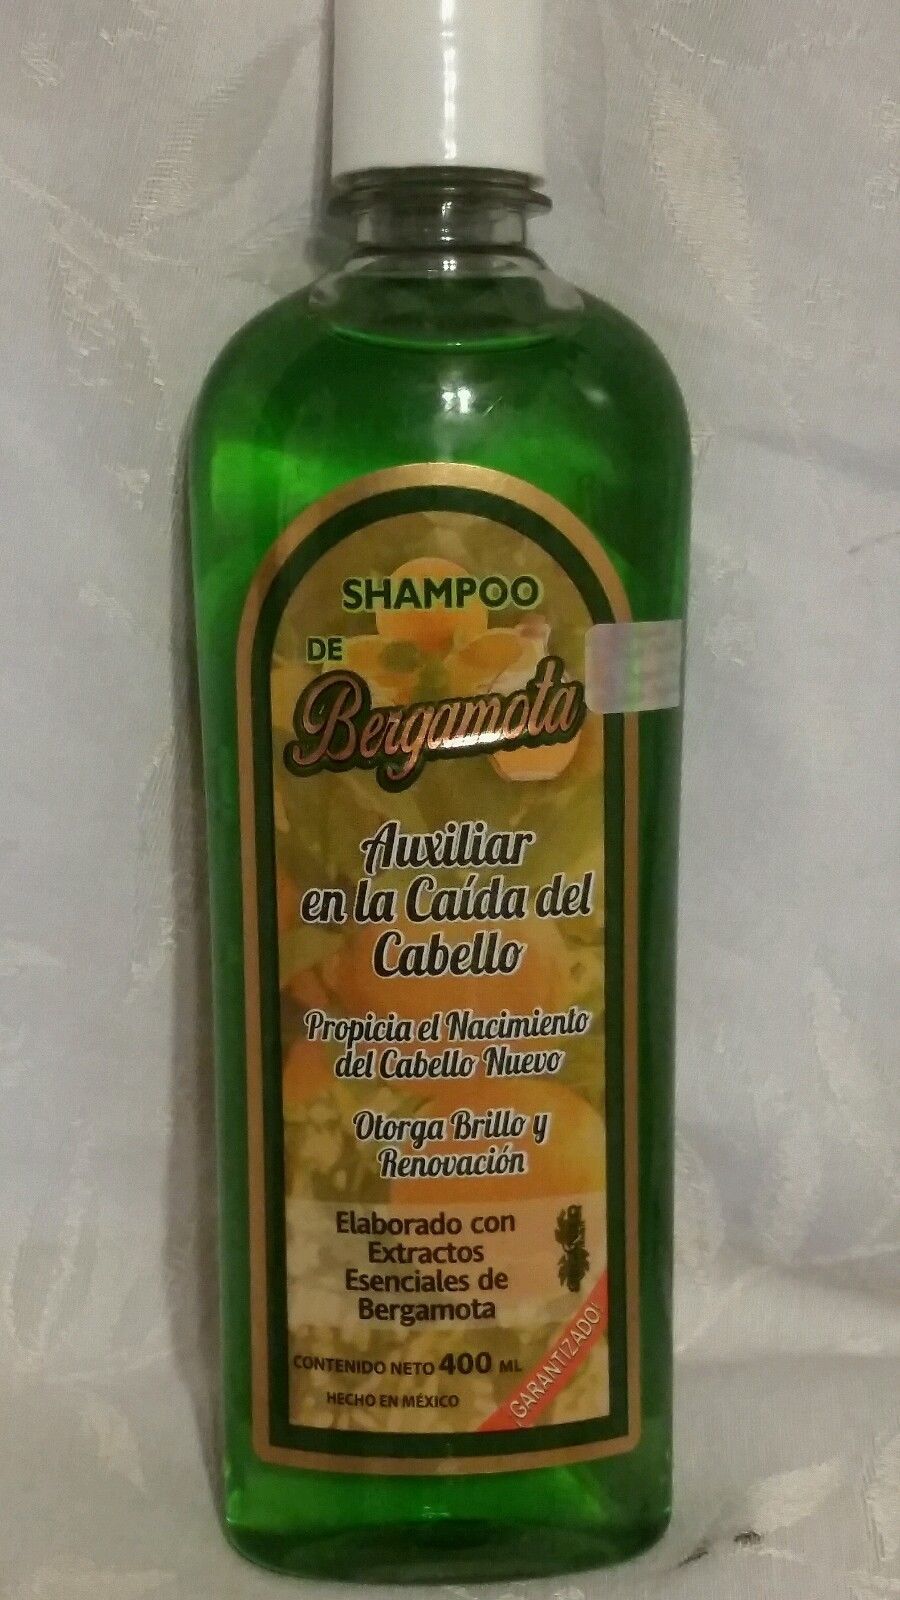 1 Shampoo De Bergamota Bergamot Shampoo And 13 Similar Items